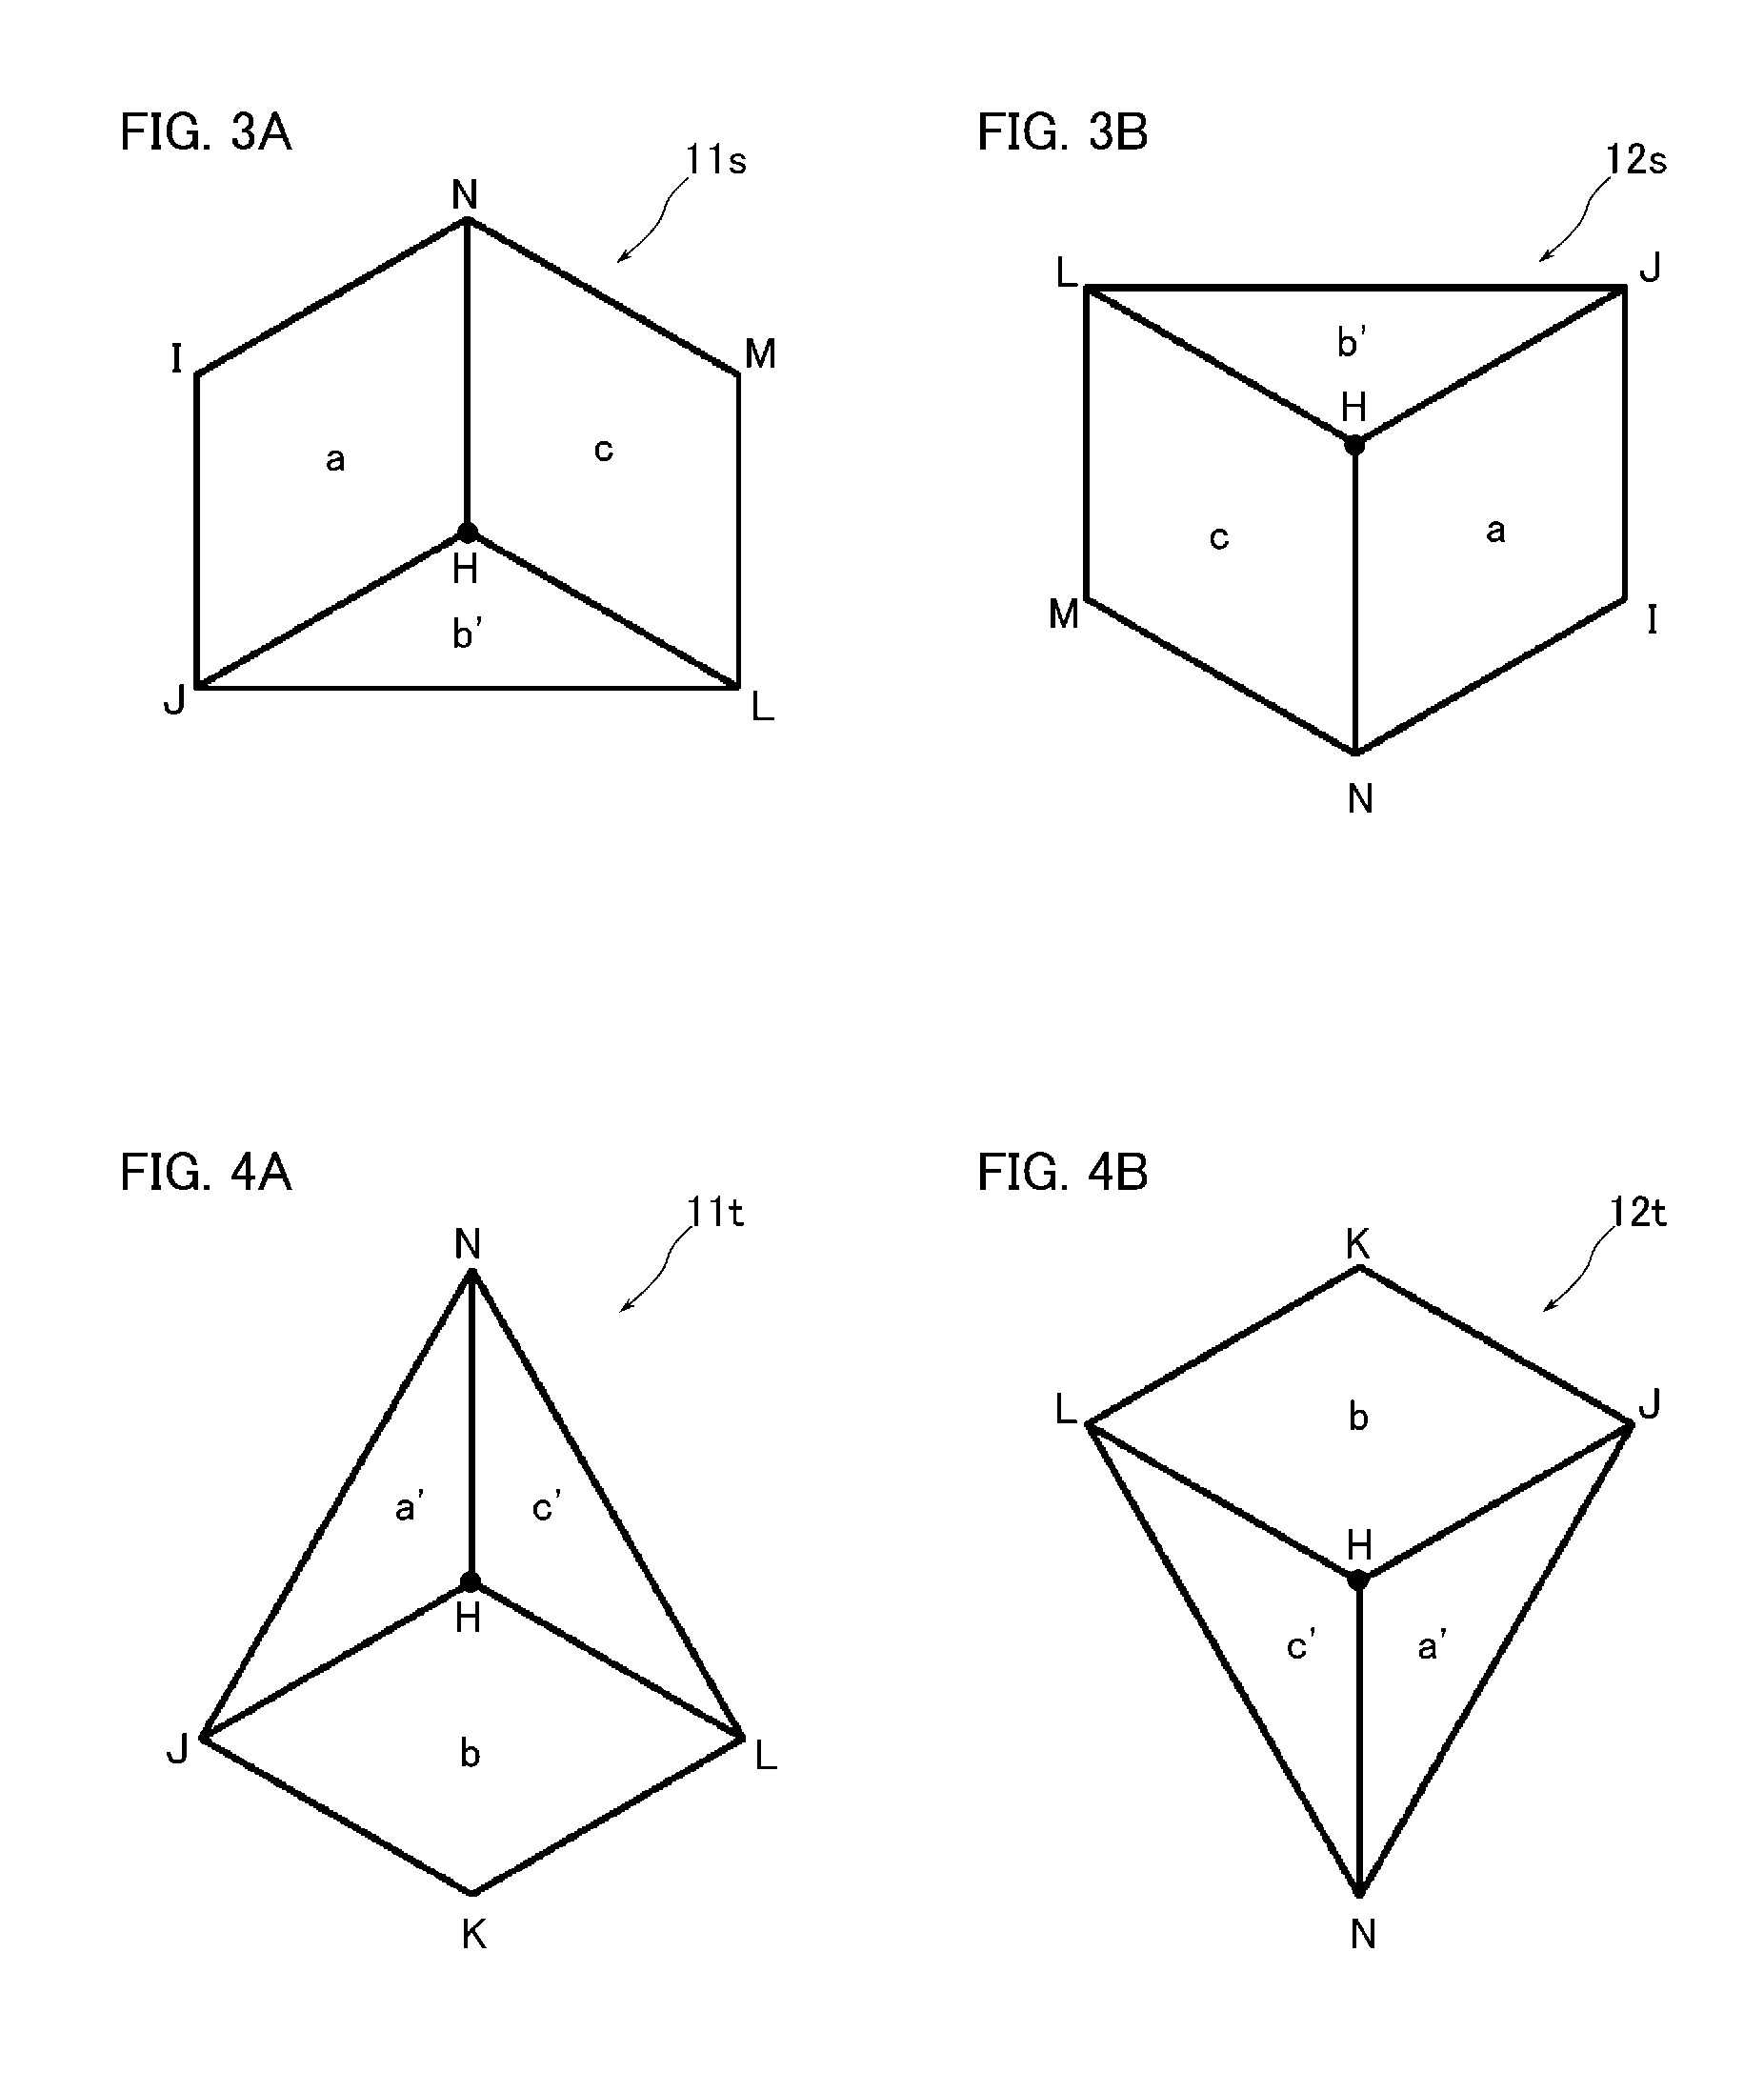 Cube-corner retroreflective sheeting